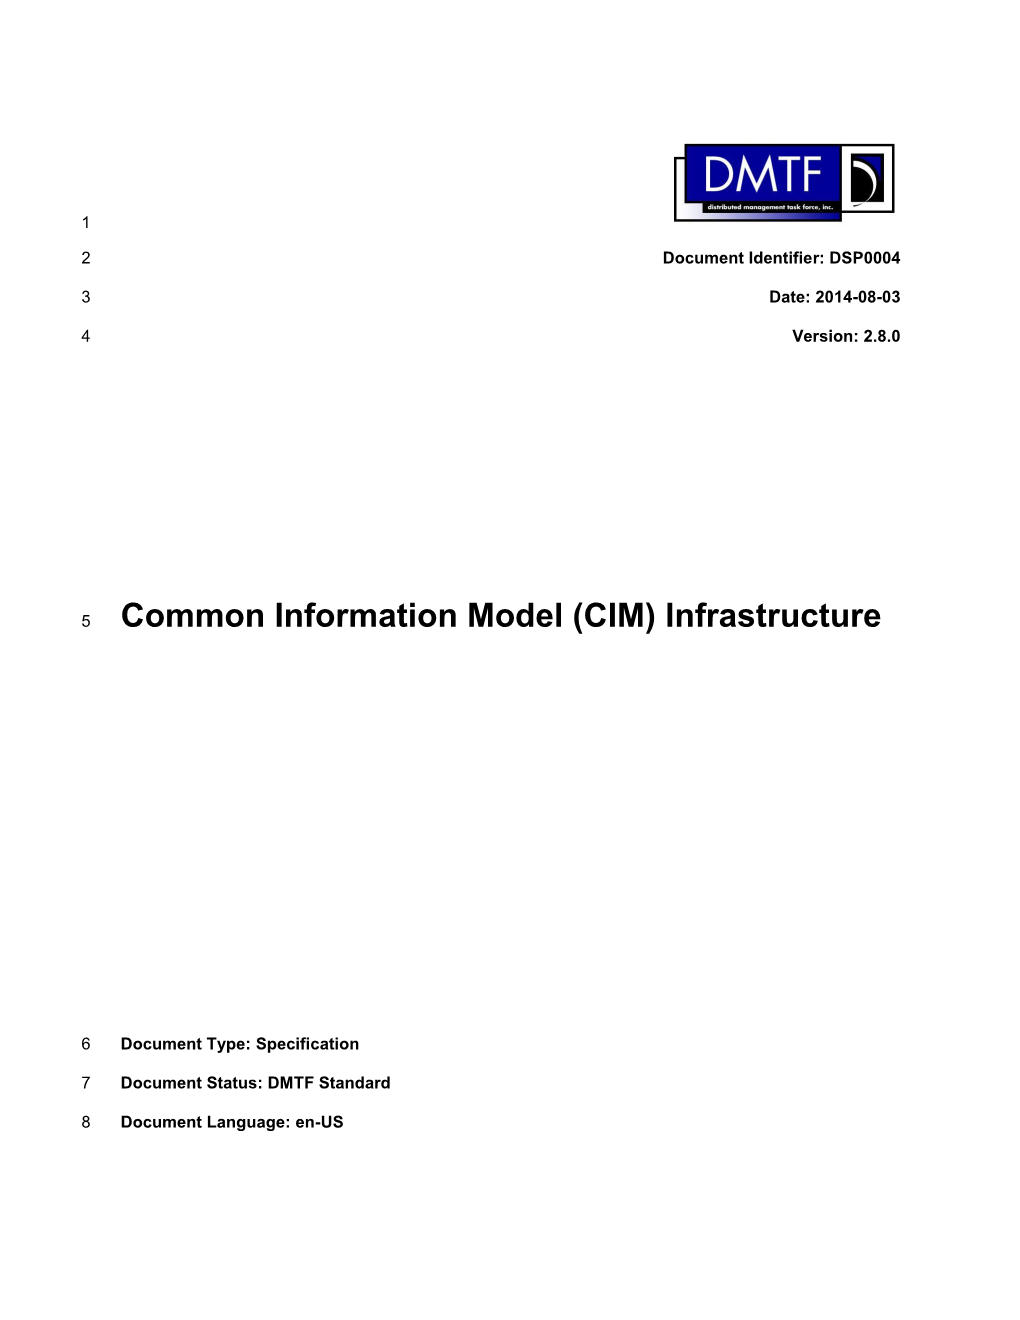 Common Information Model (CIM) Infrastructure